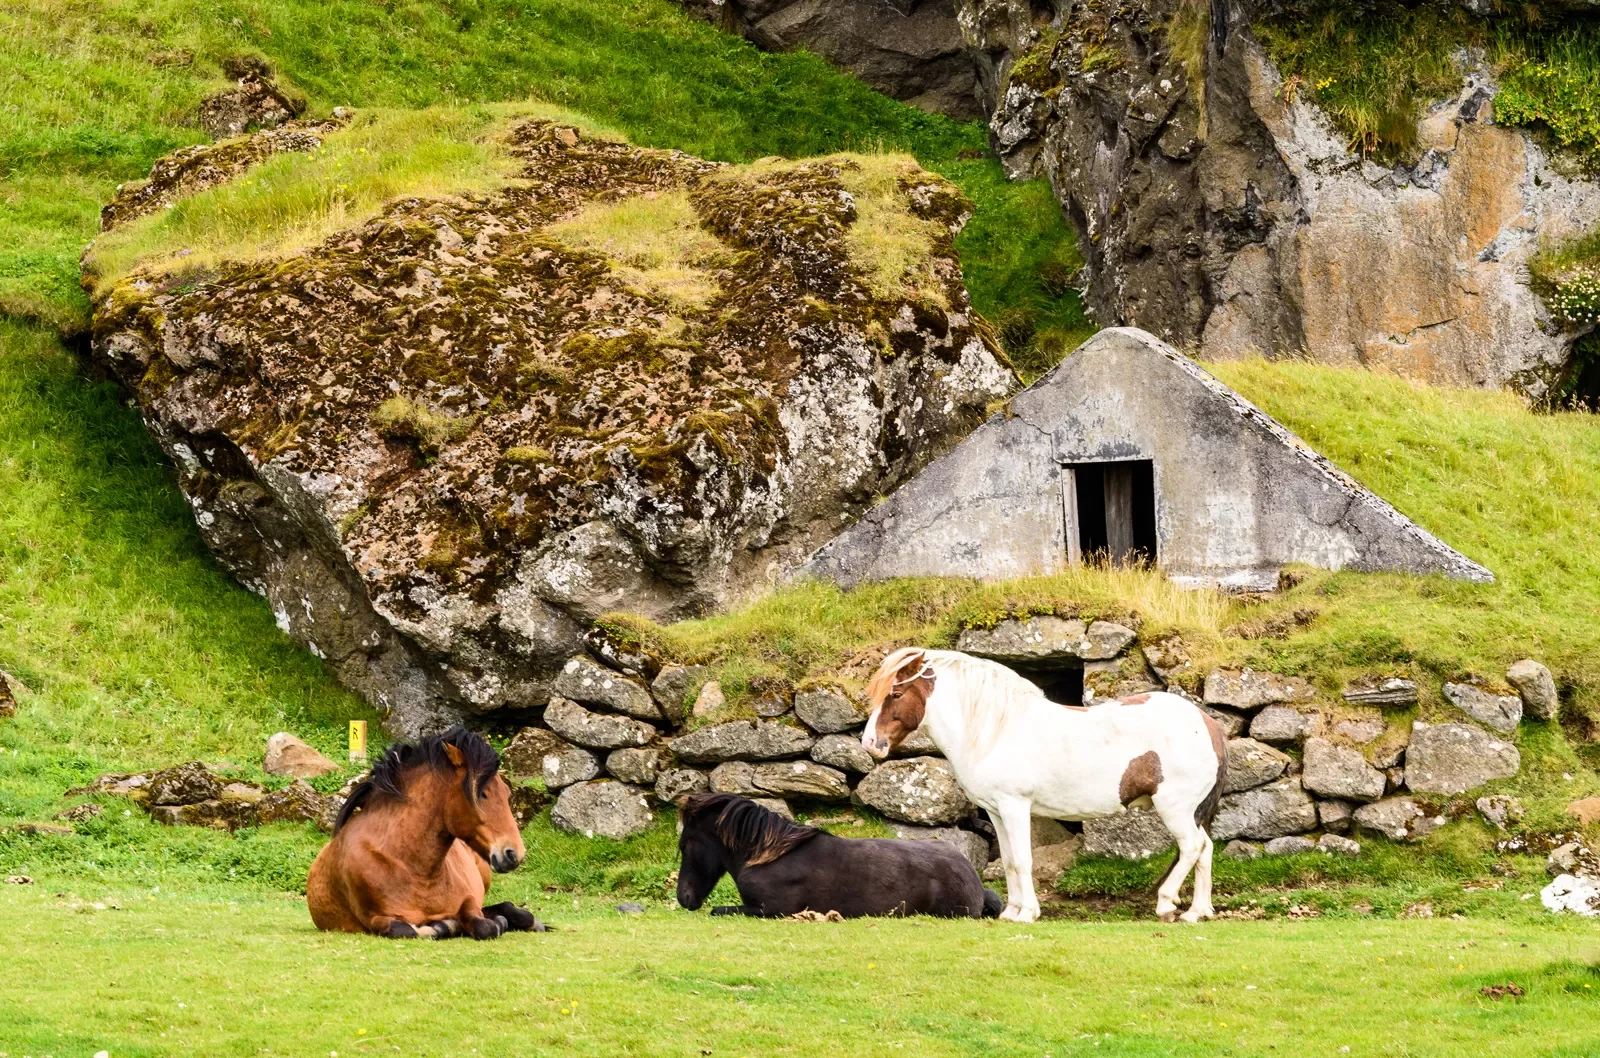 Ponies resting on a grassy field